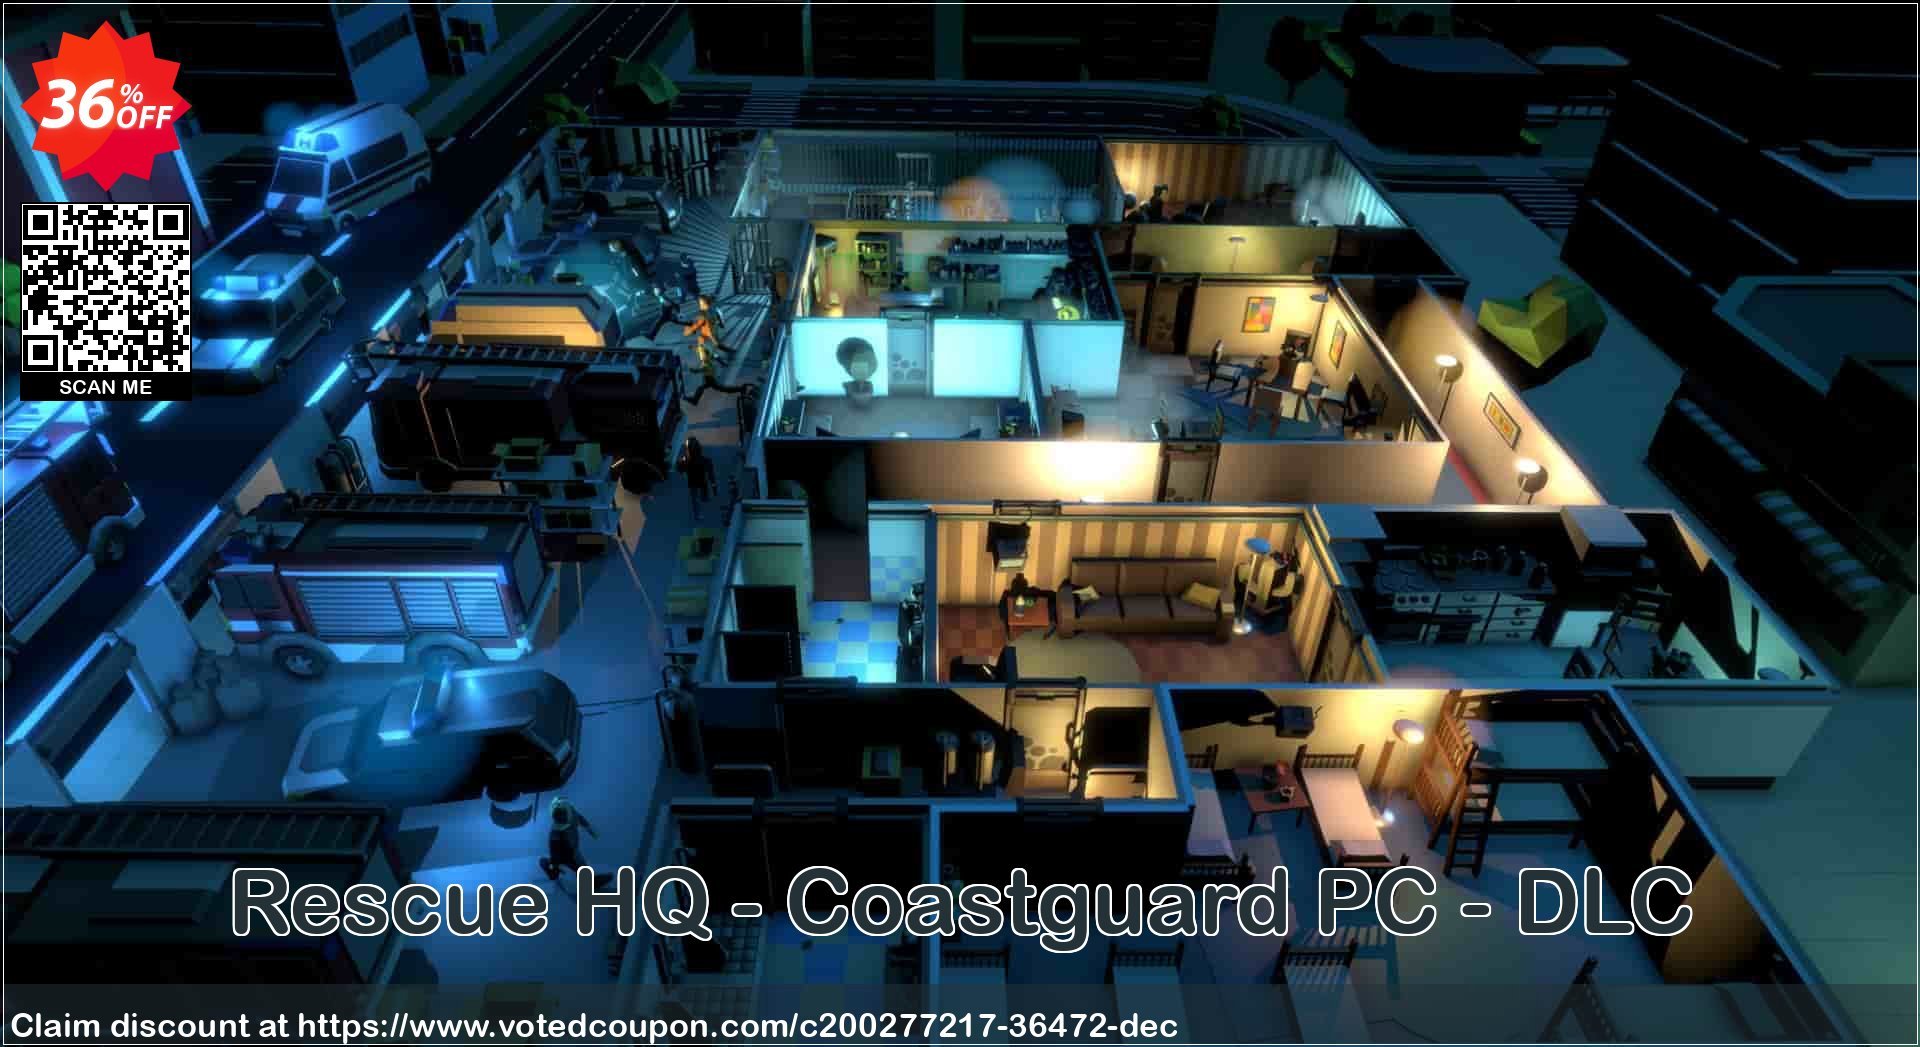 Rescue HQ - Coastguard PC - DLC Coupon Code Apr 2024, 36% OFF - VotedCoupon